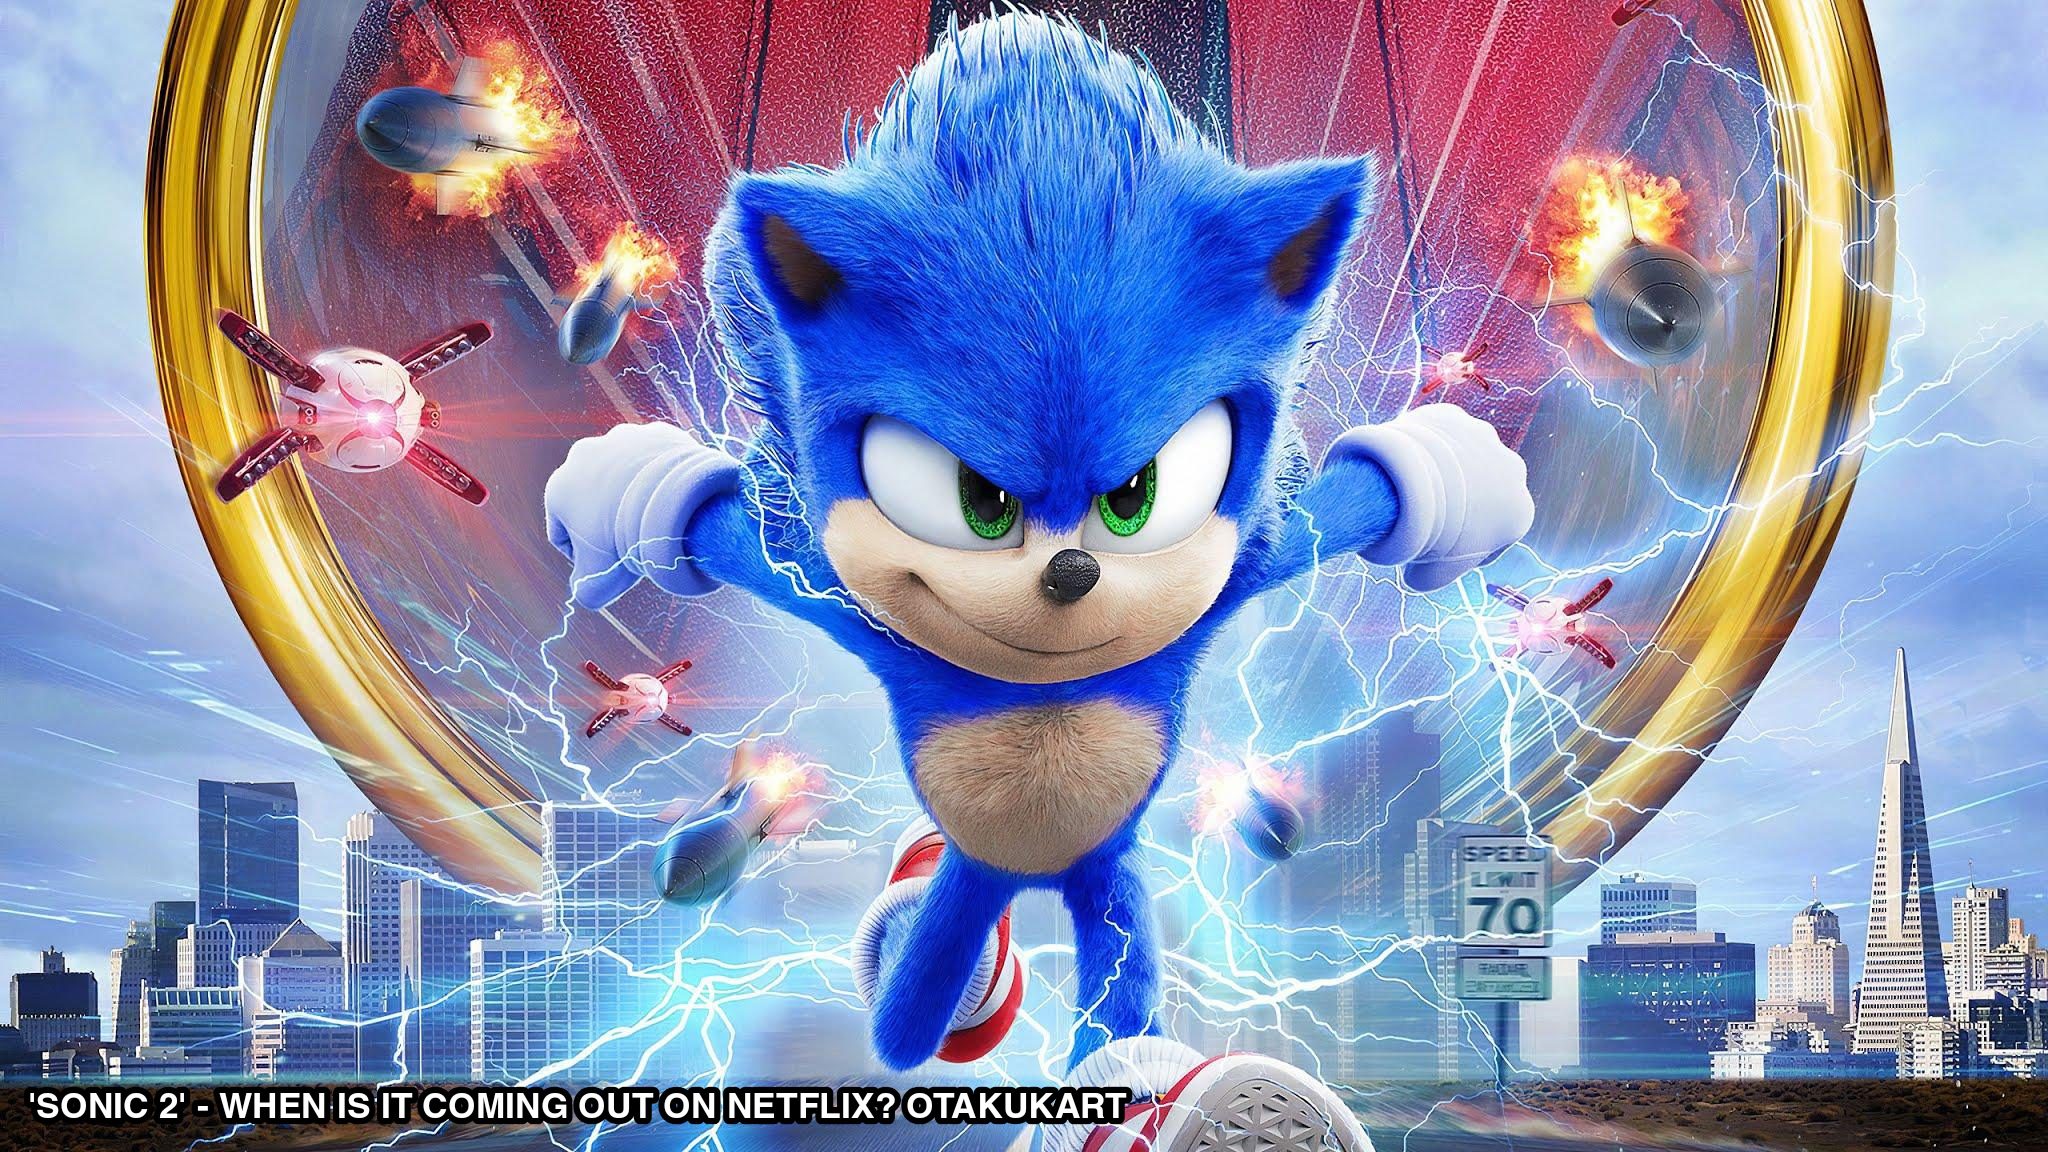 Sonic 2 release date